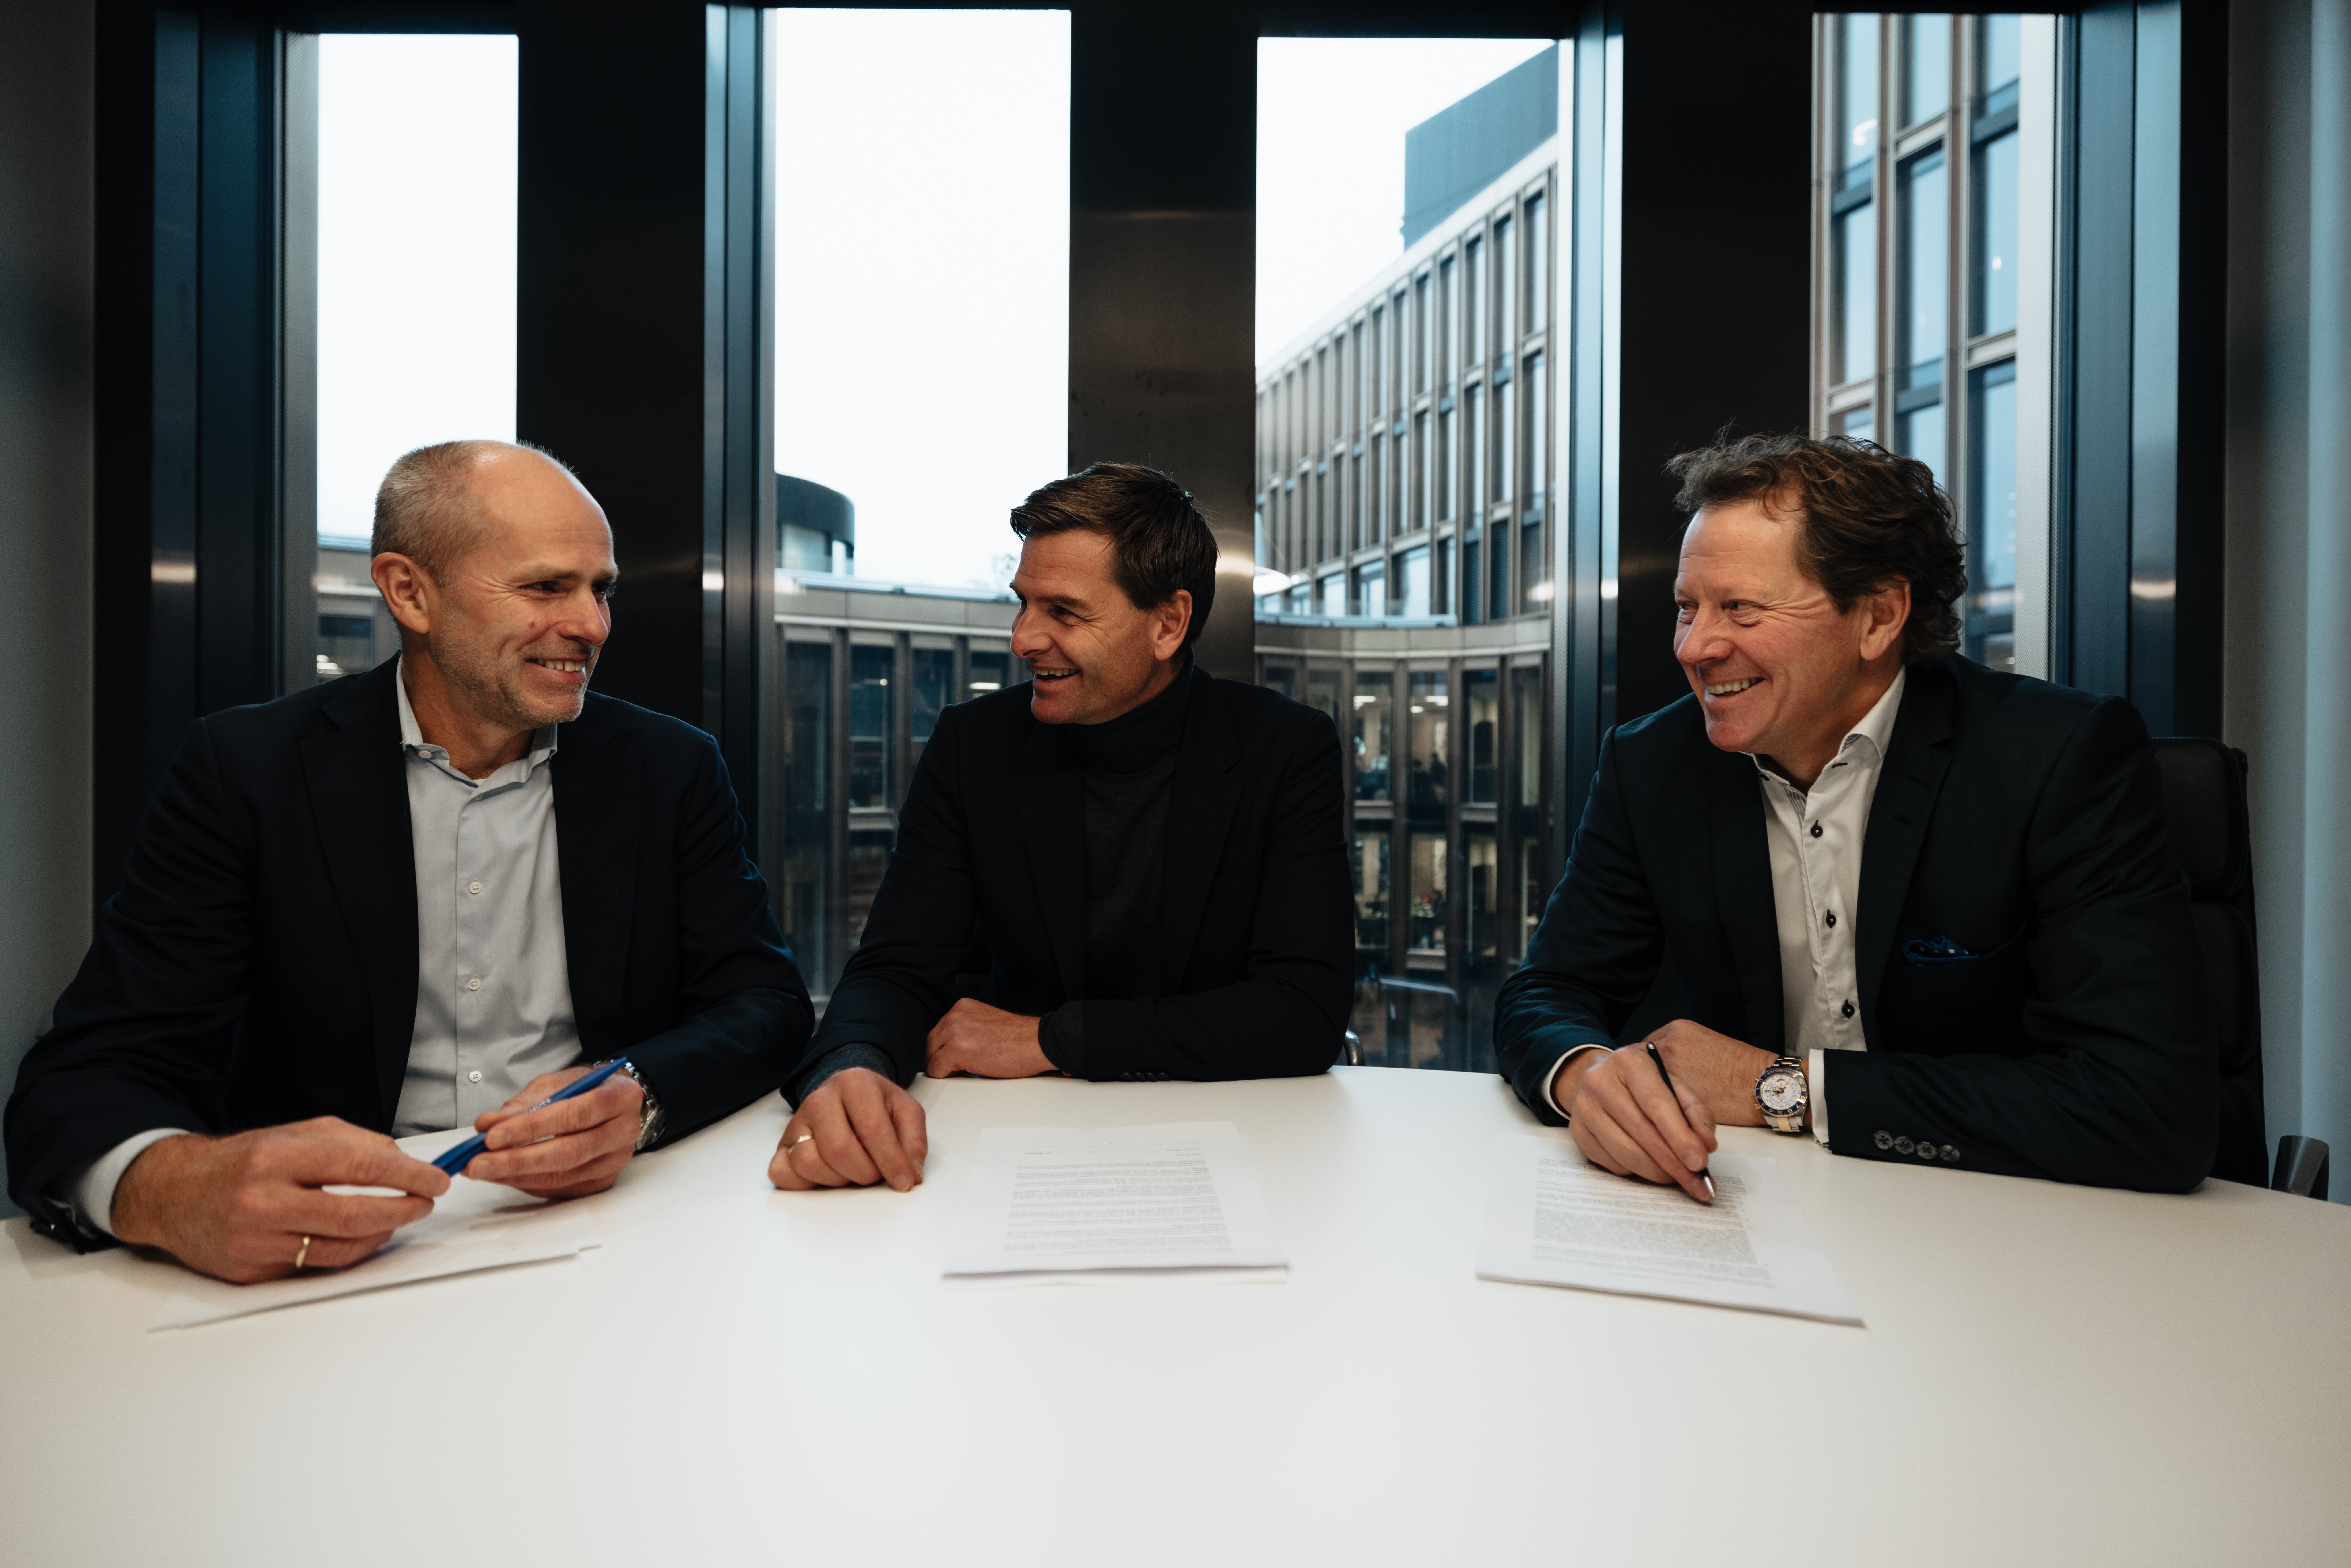 Glen Ole Rødland, Arve Fresvik and Knut Herman Gjøvaag are collaborating on a new electric boat company.